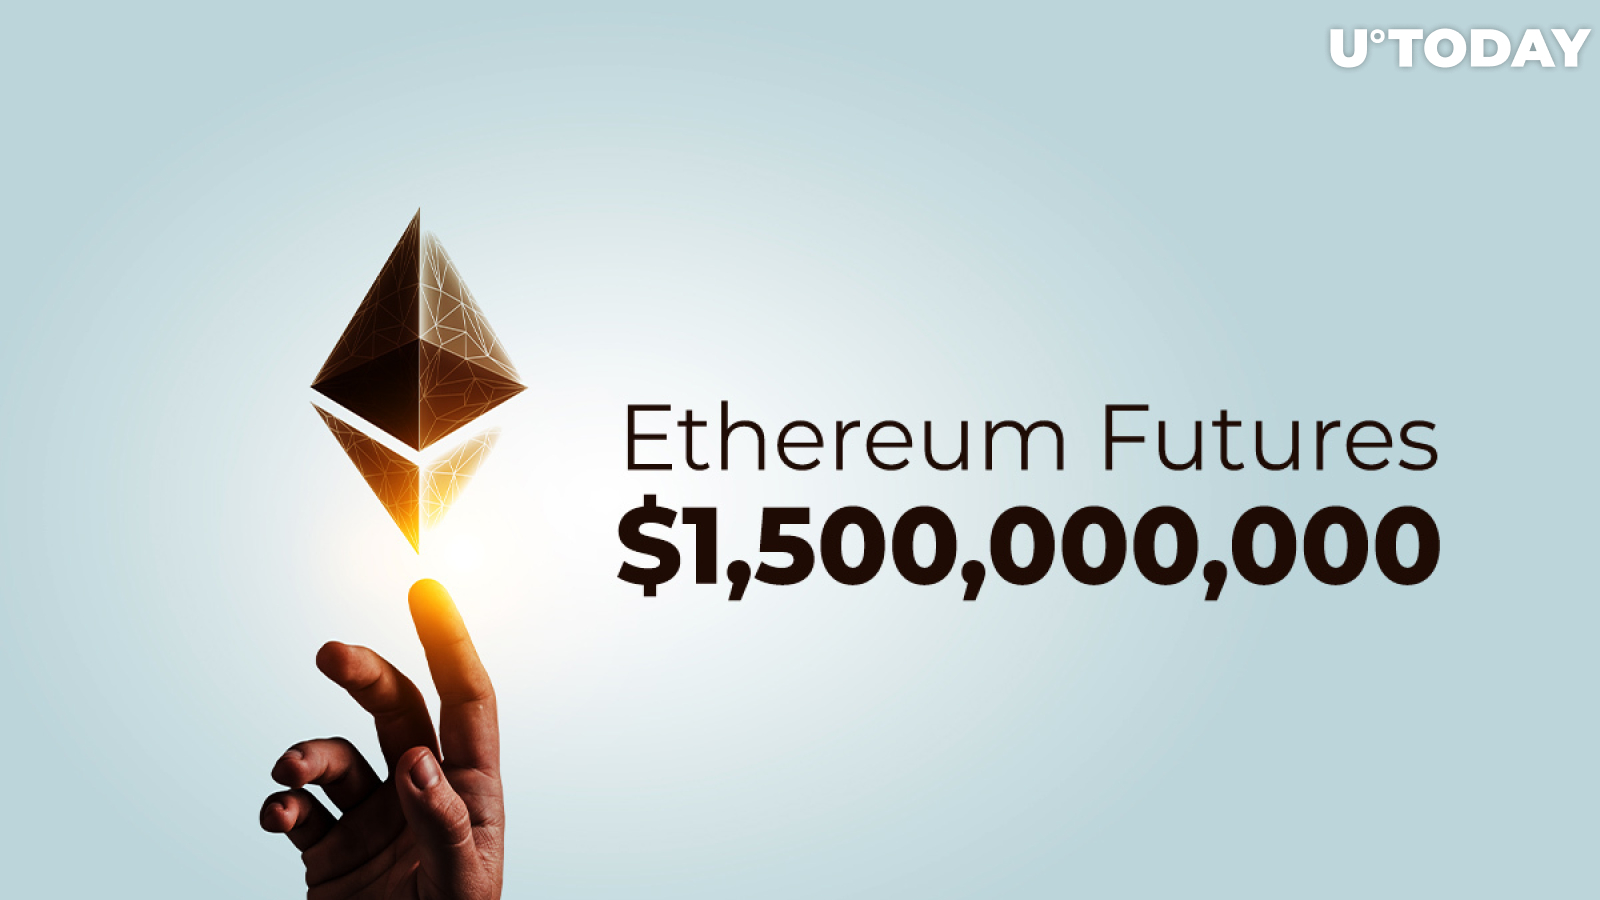 Open Interest in Ethereum Futures Nearing $1,500,000,000